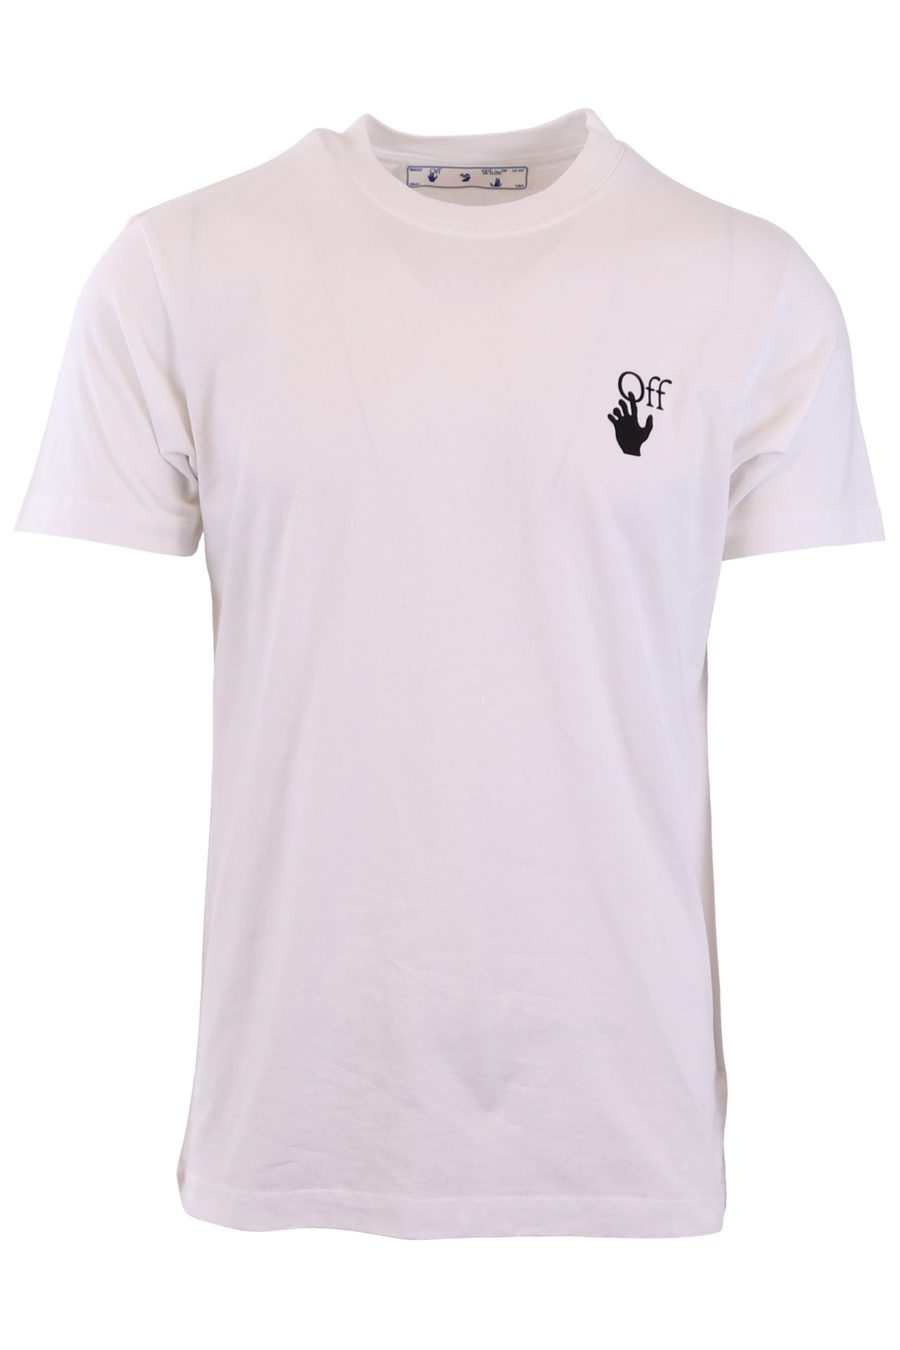 Camiseta Off-White blanca con flechas rojas - 84f5b2ec14f6b0533d4fb26e7a9decd5ed949954